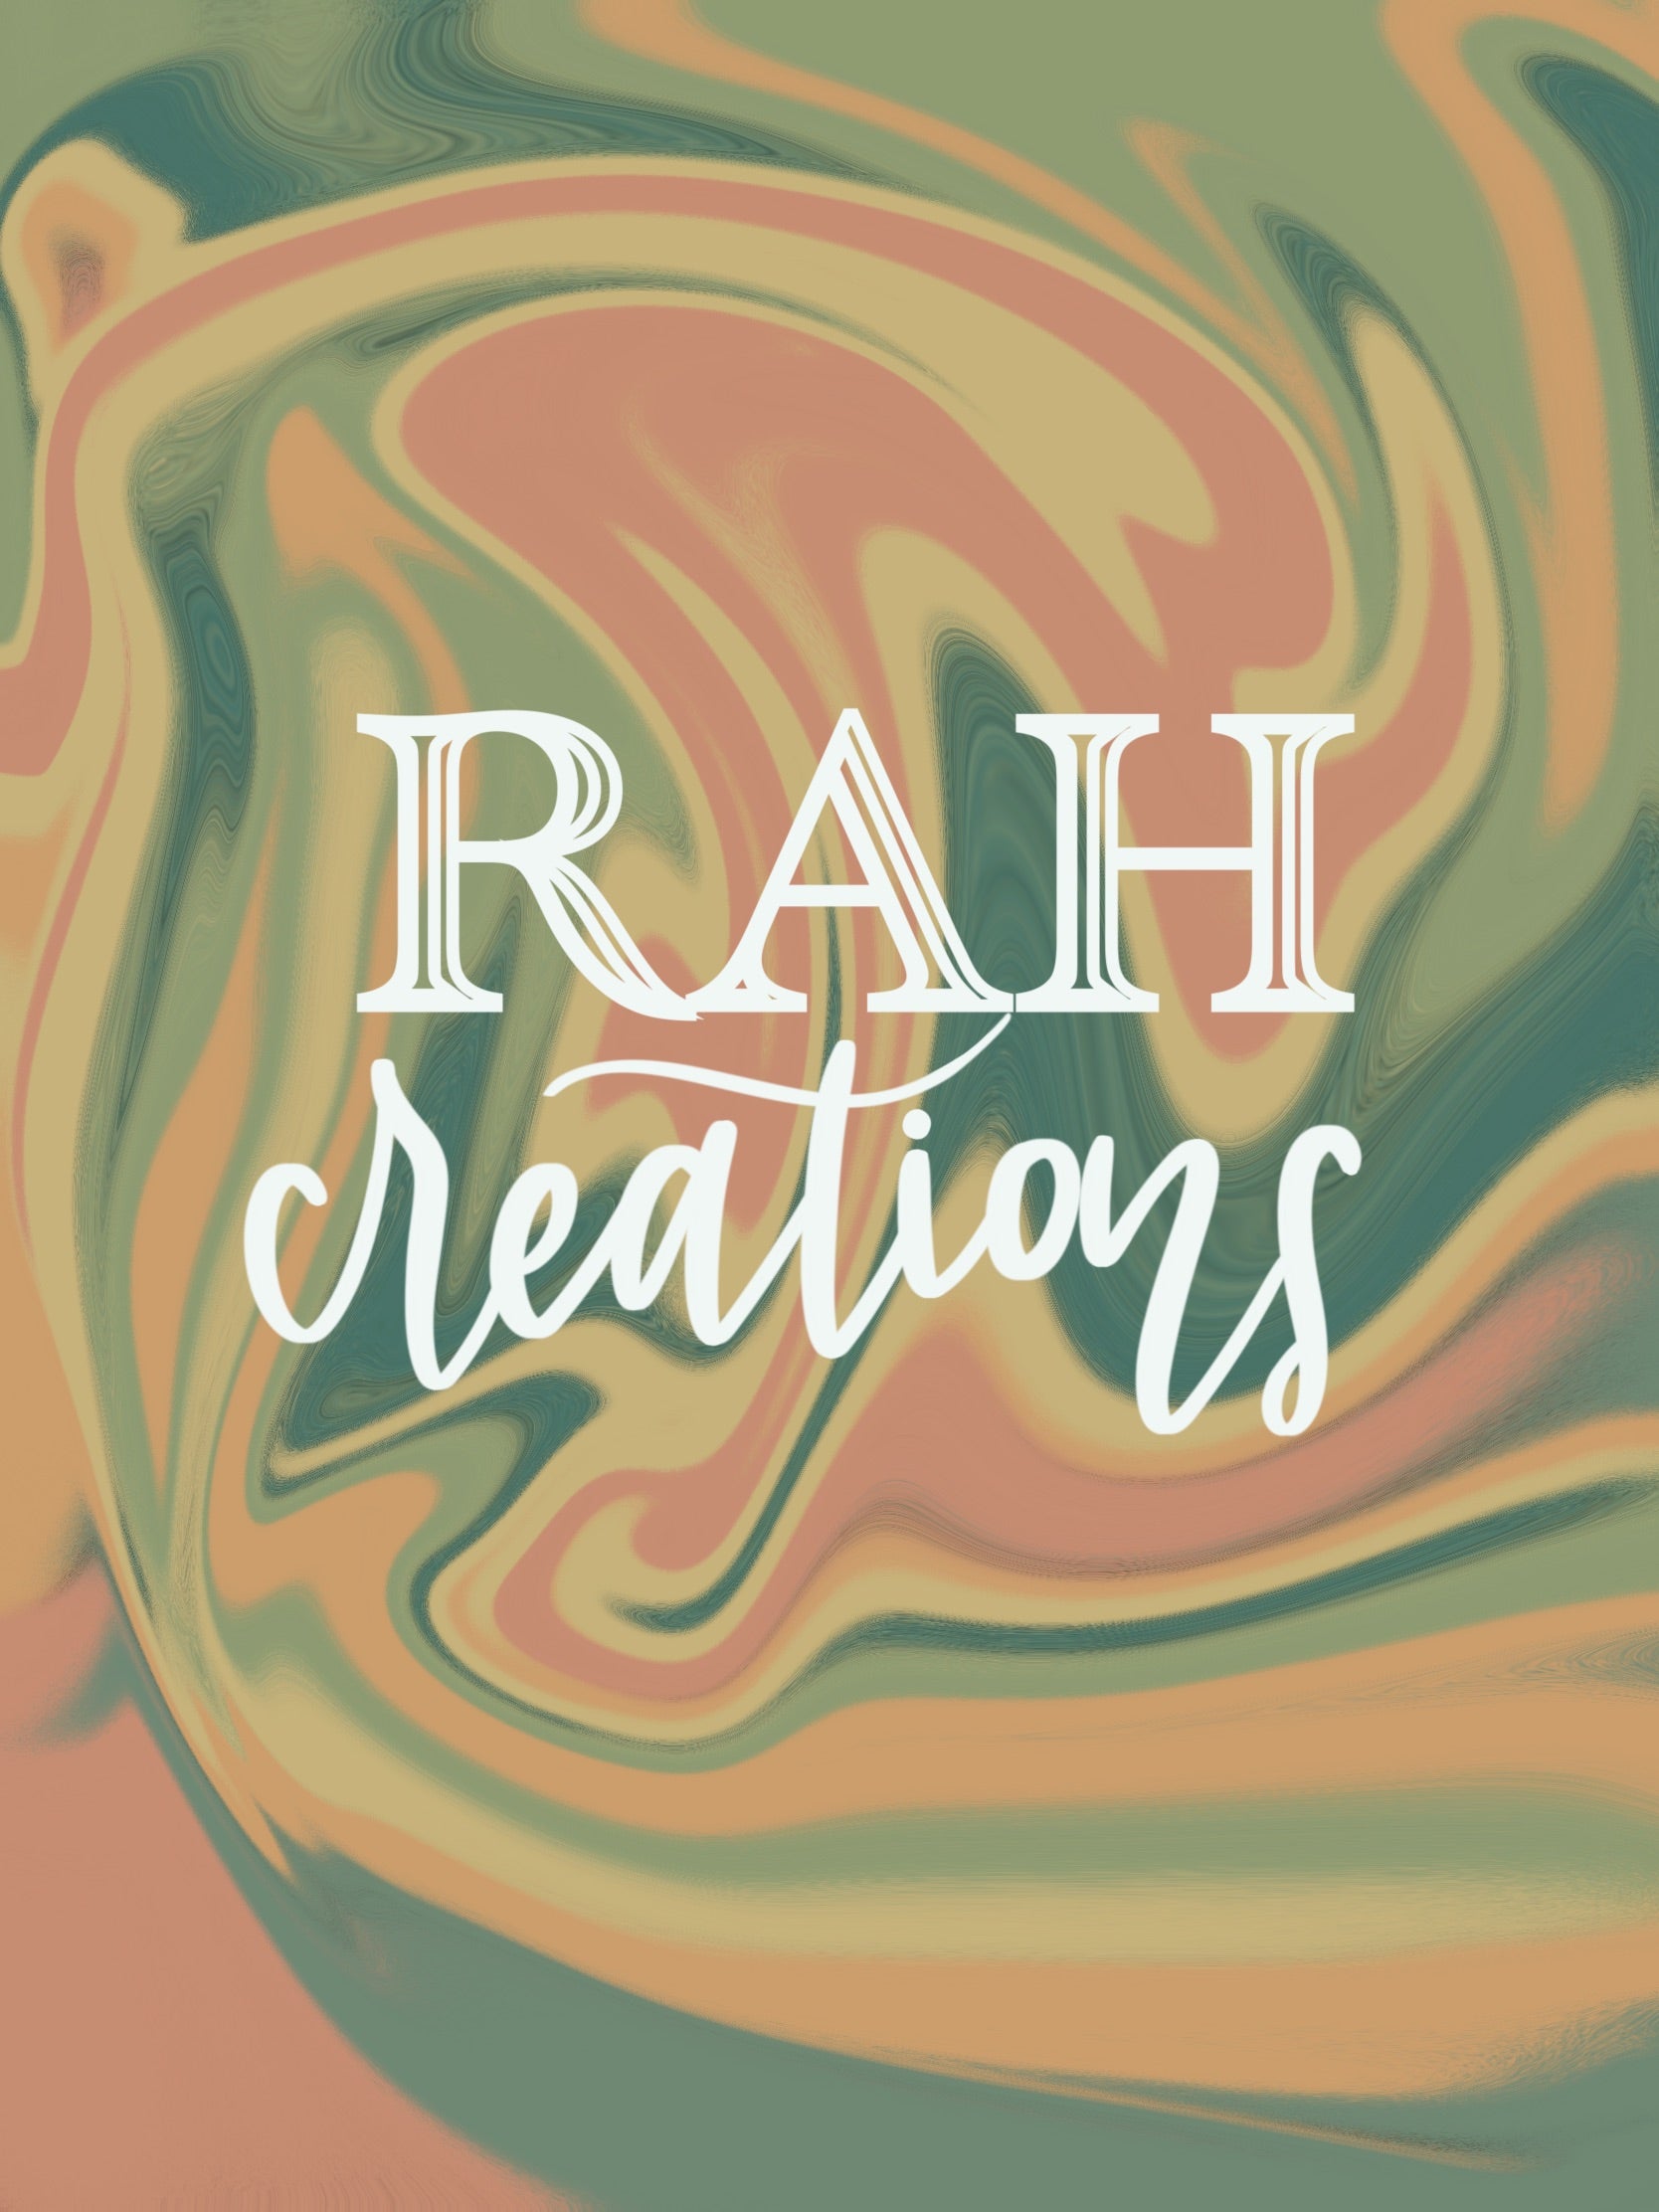 Rah Creations